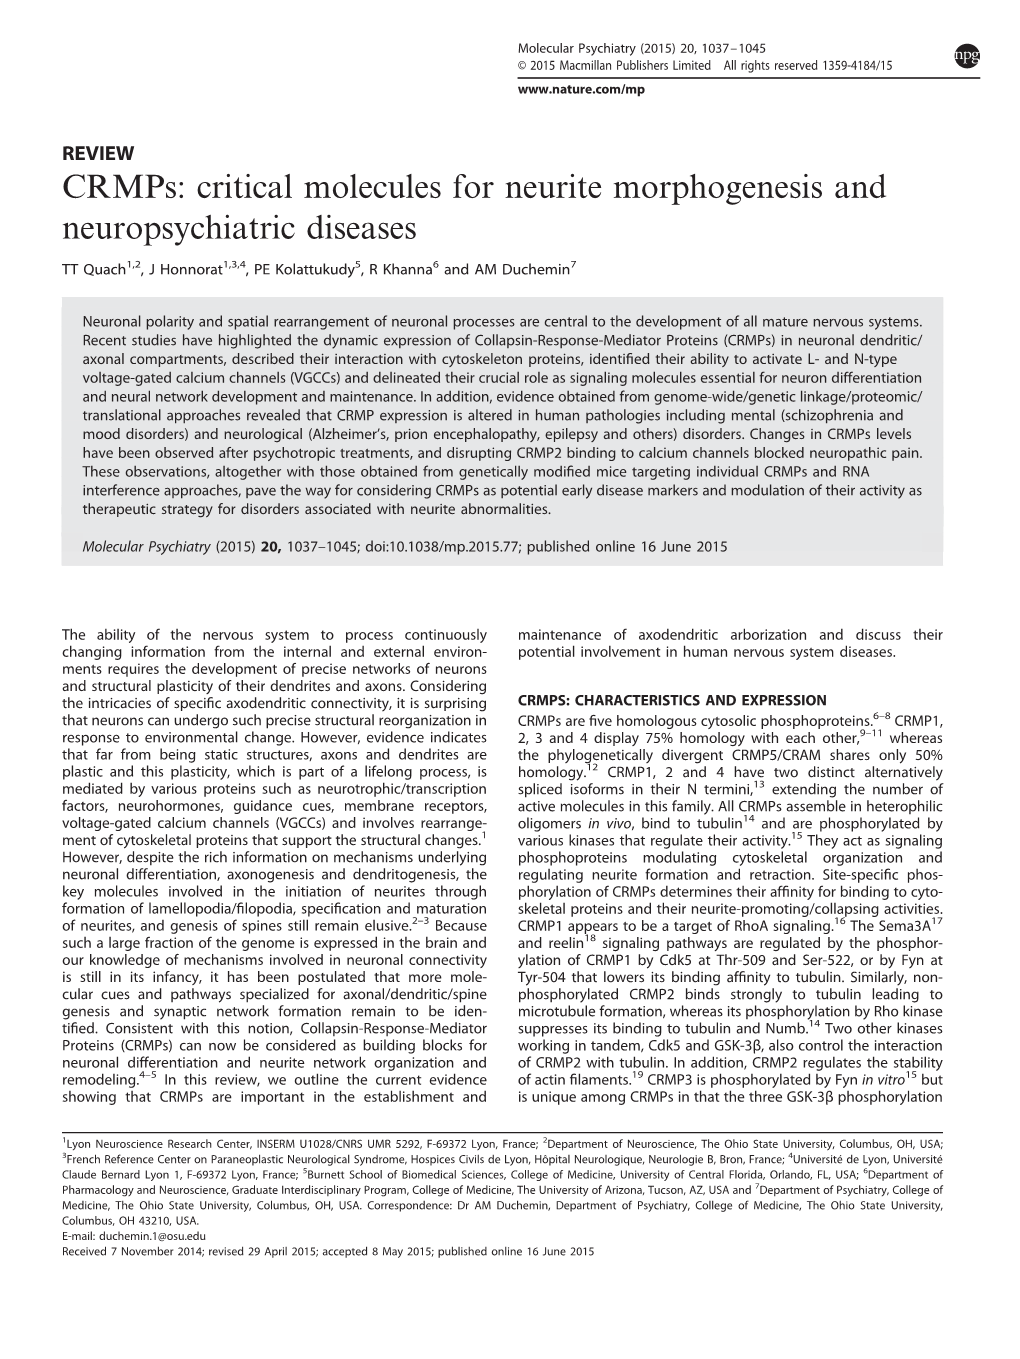 Crmps: Critical Molecules for Neurite Morphogenesis and Neuropsychiatric Diseases